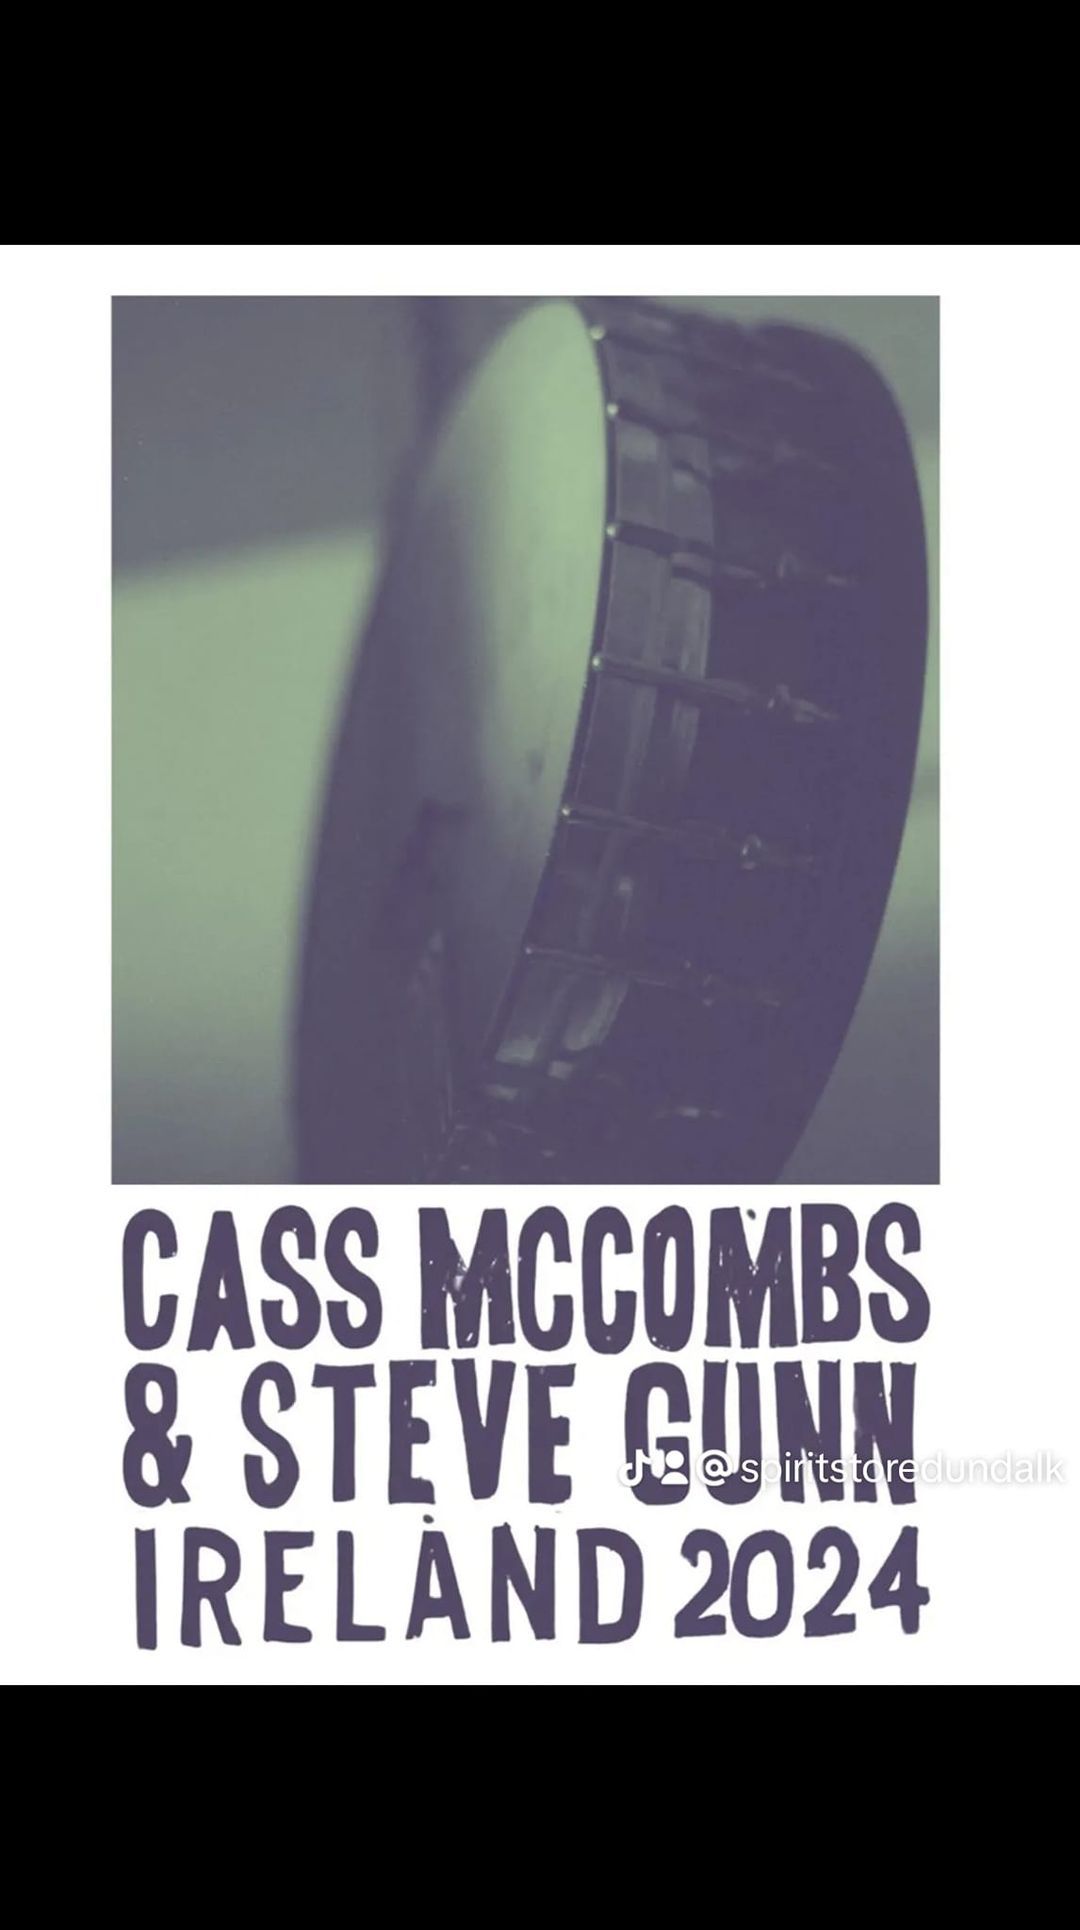 Cass McCombs & Steve Gunn\n Friday 3rd May